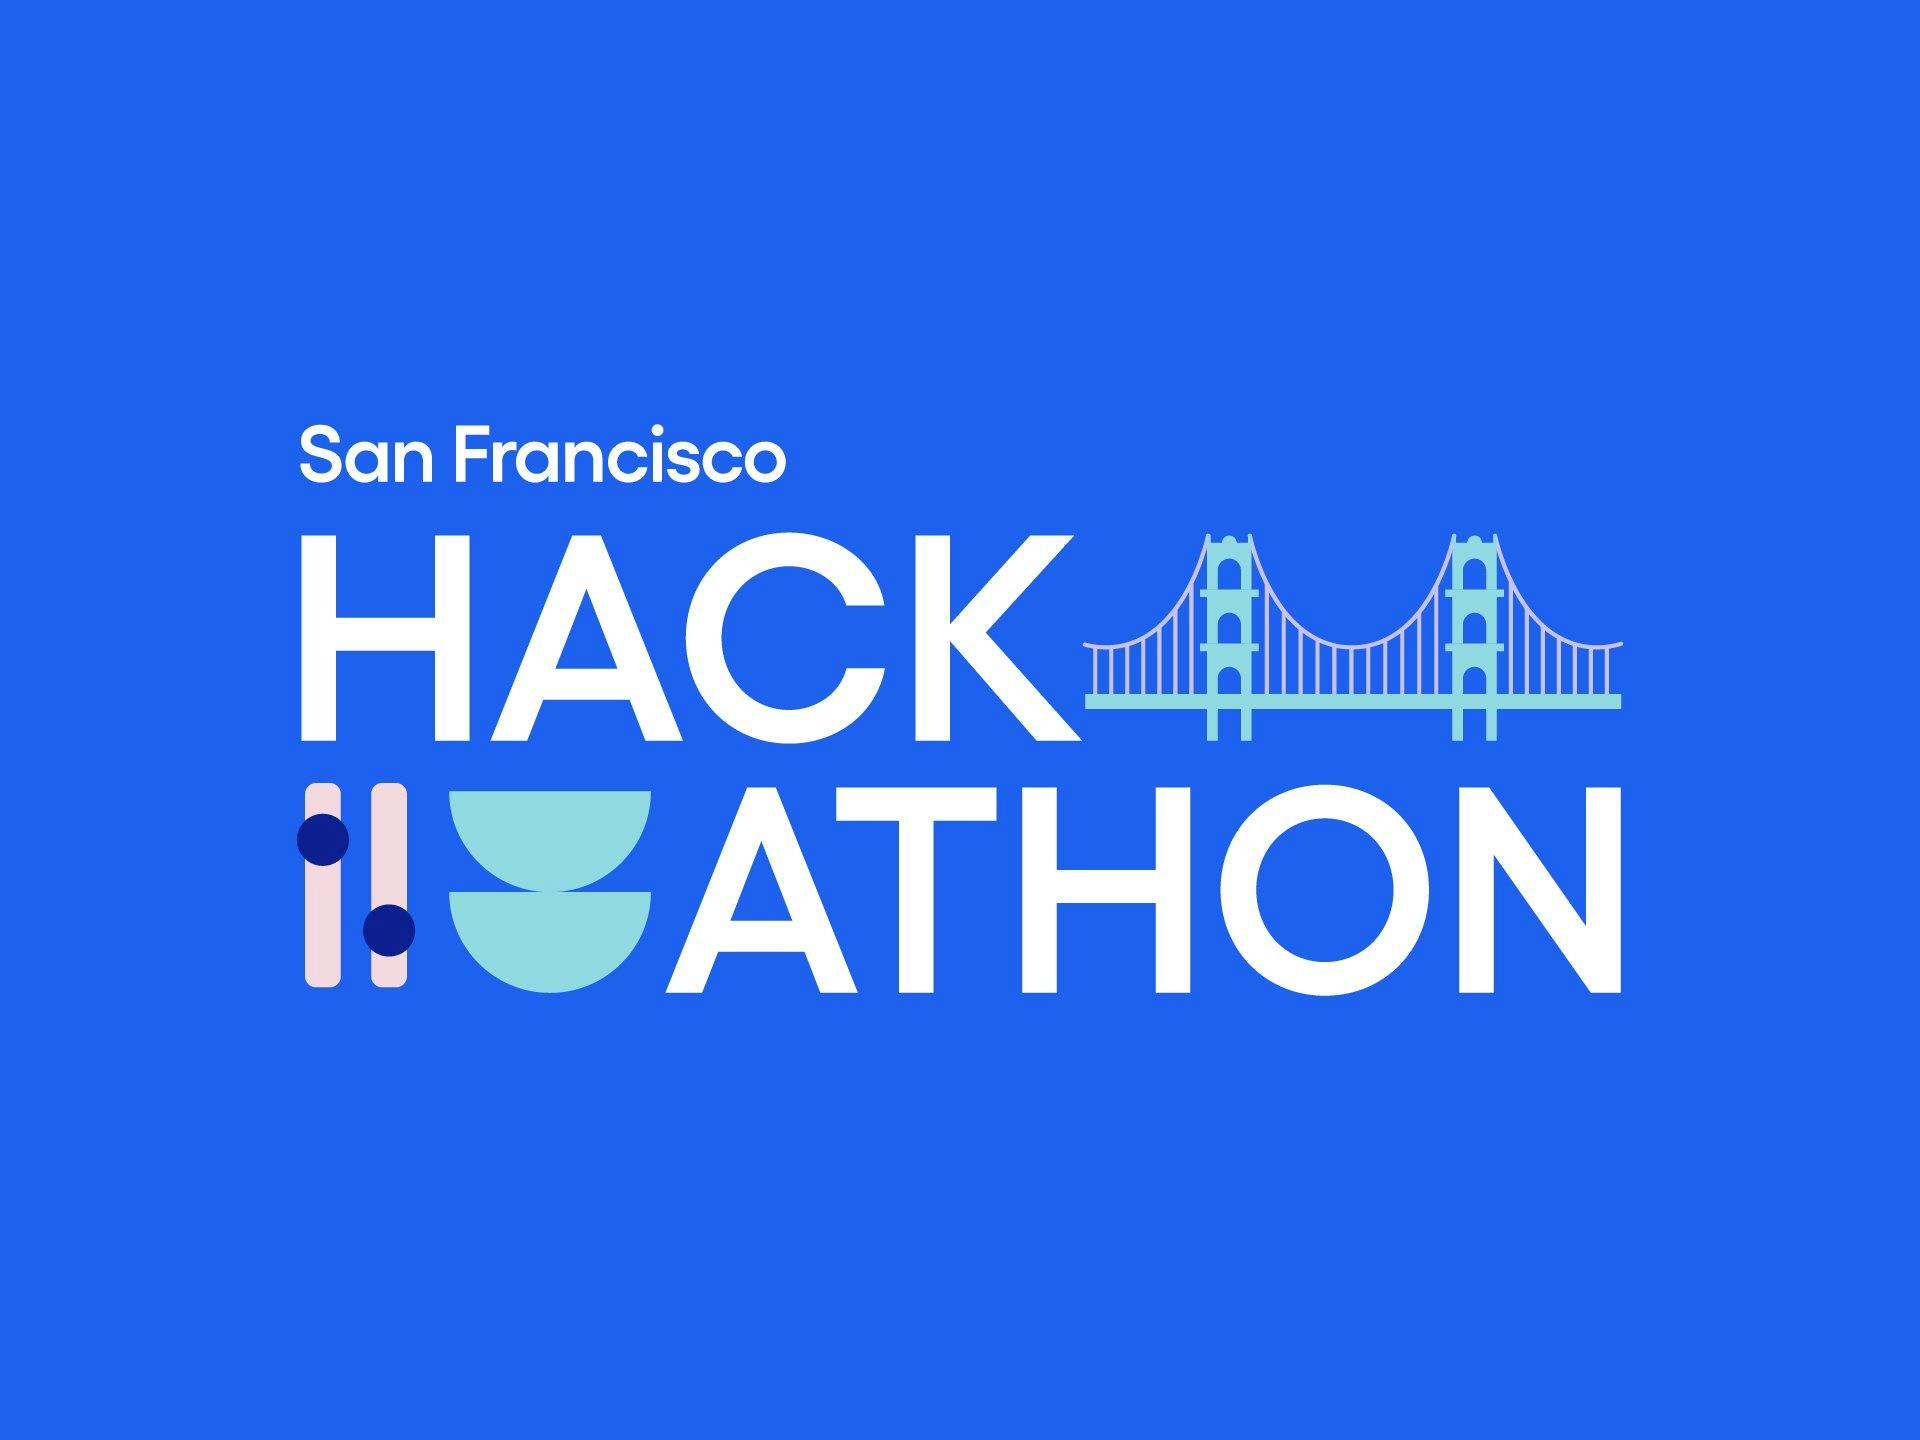 AI Hackathon at Amplitude SF Logo